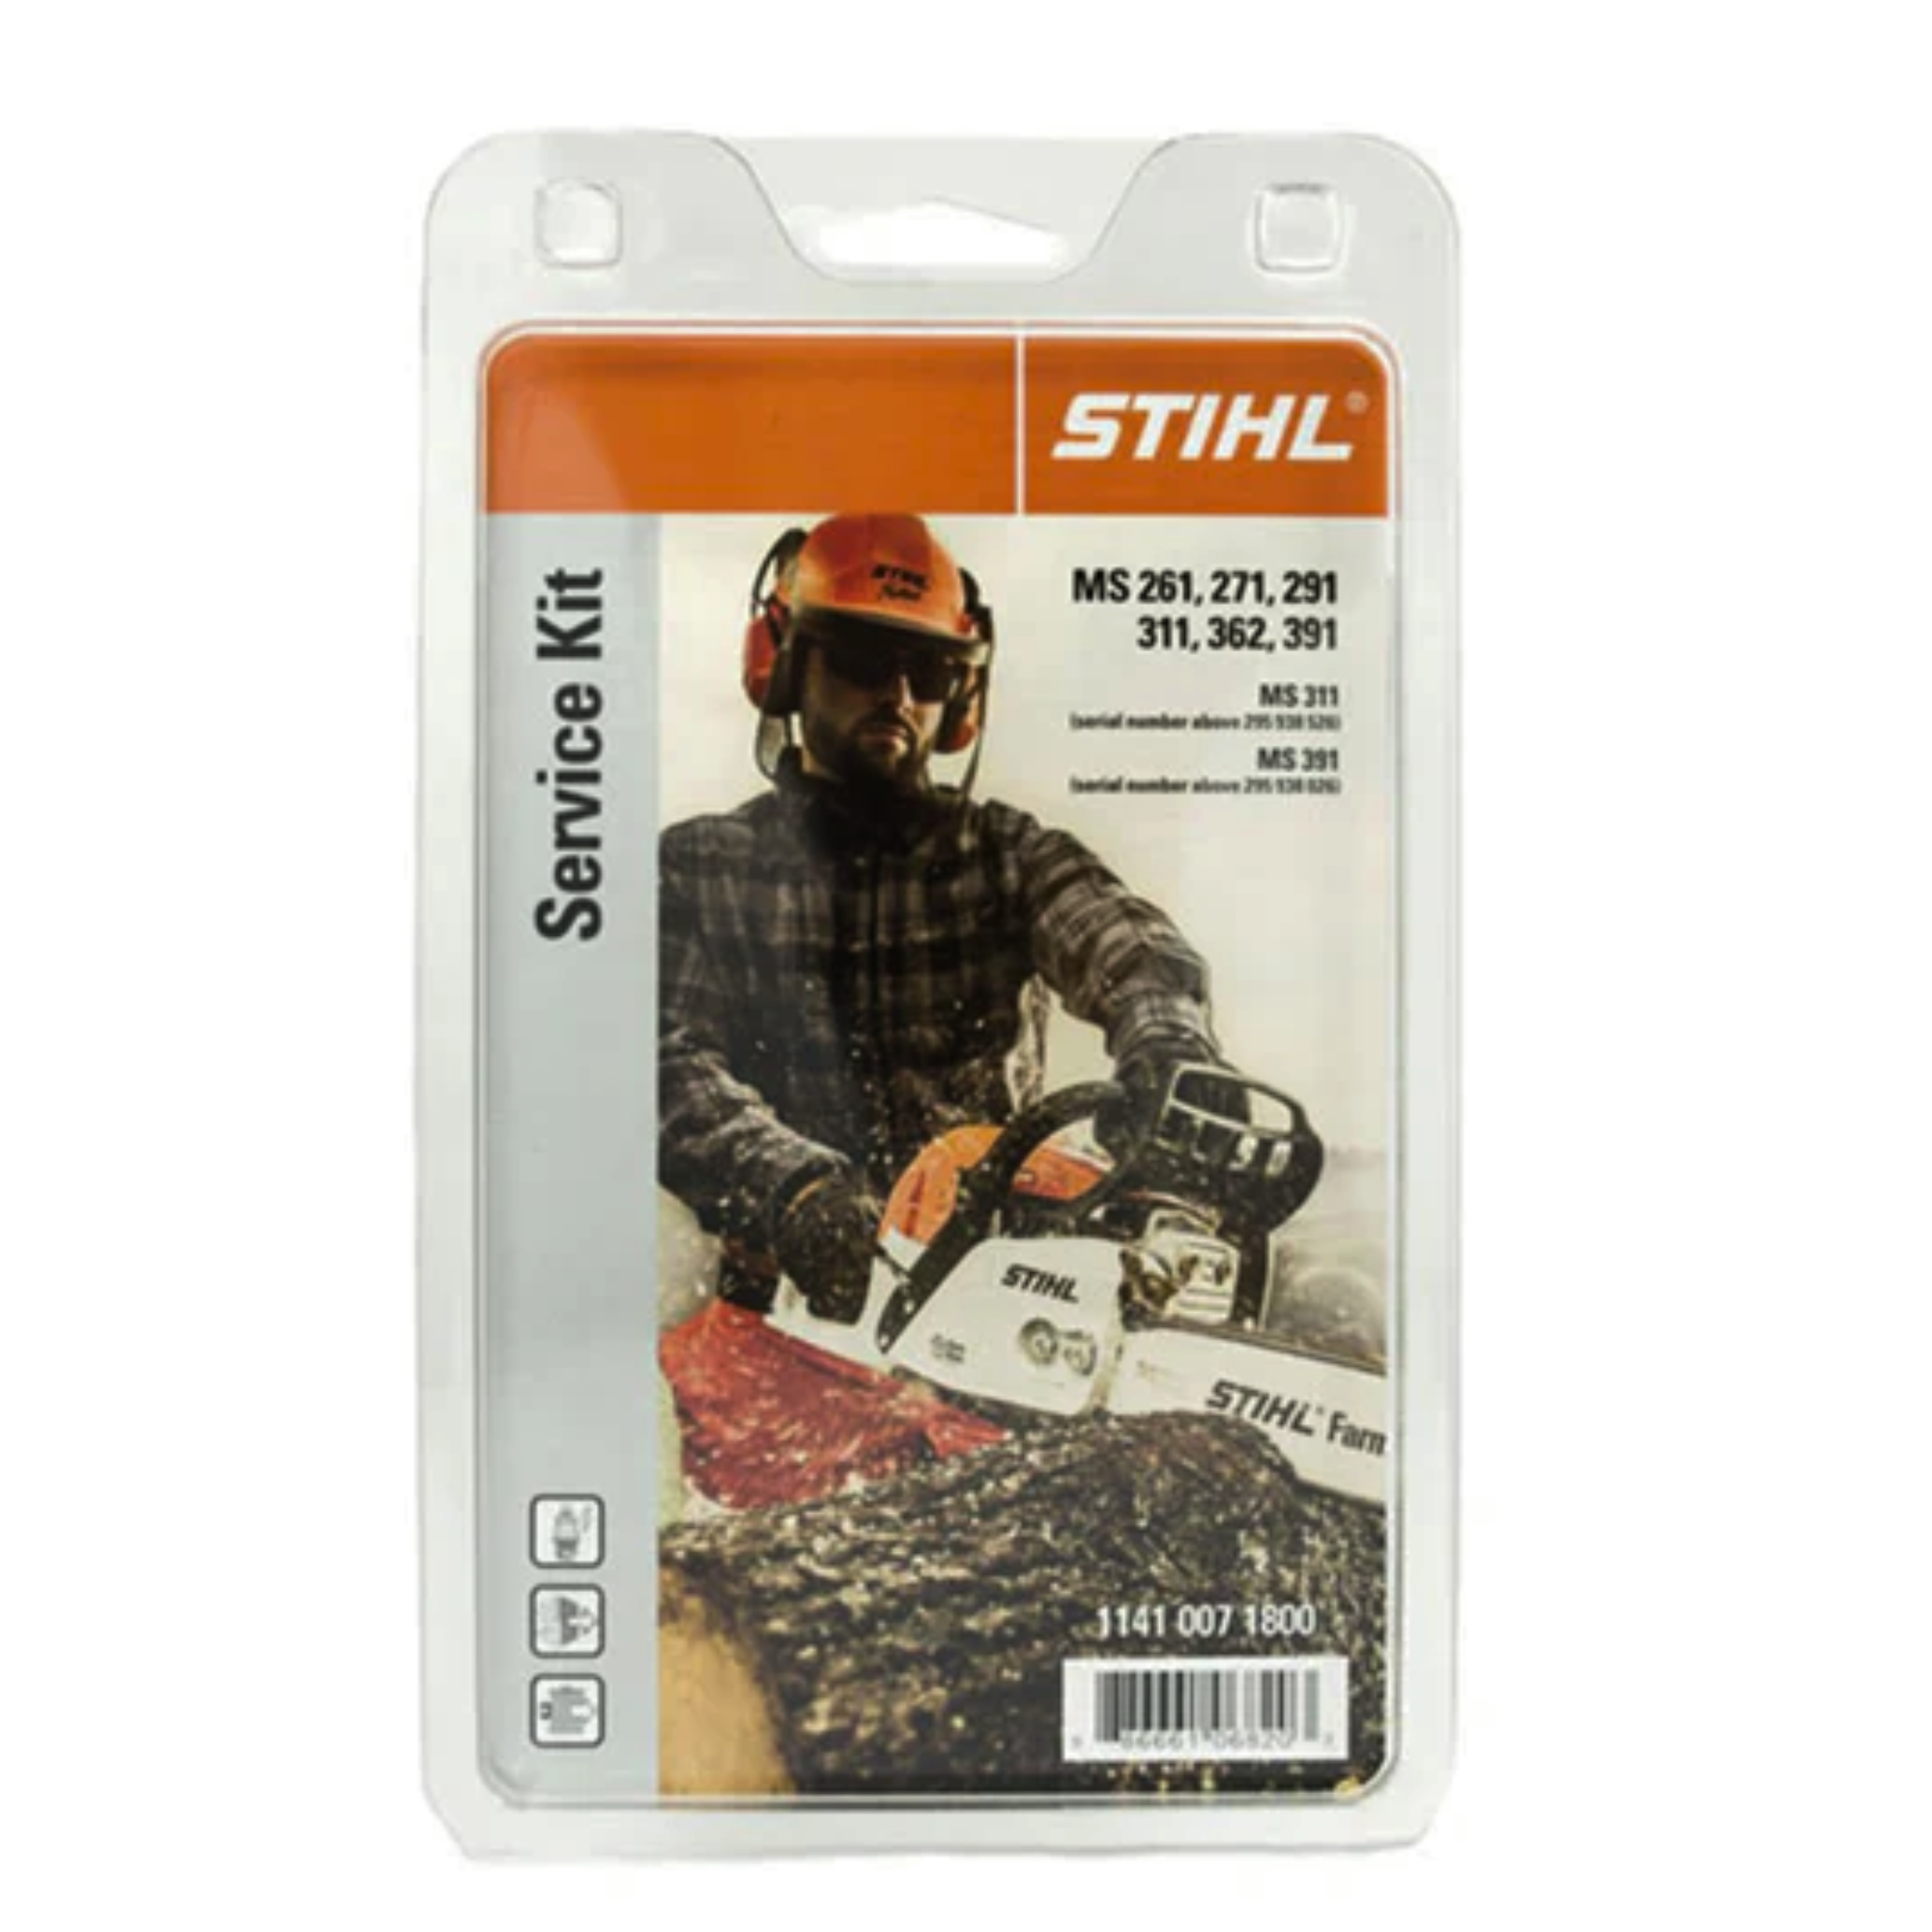 STIHL Chainsaw Service Kit 1141 Series | 1141 007 1800